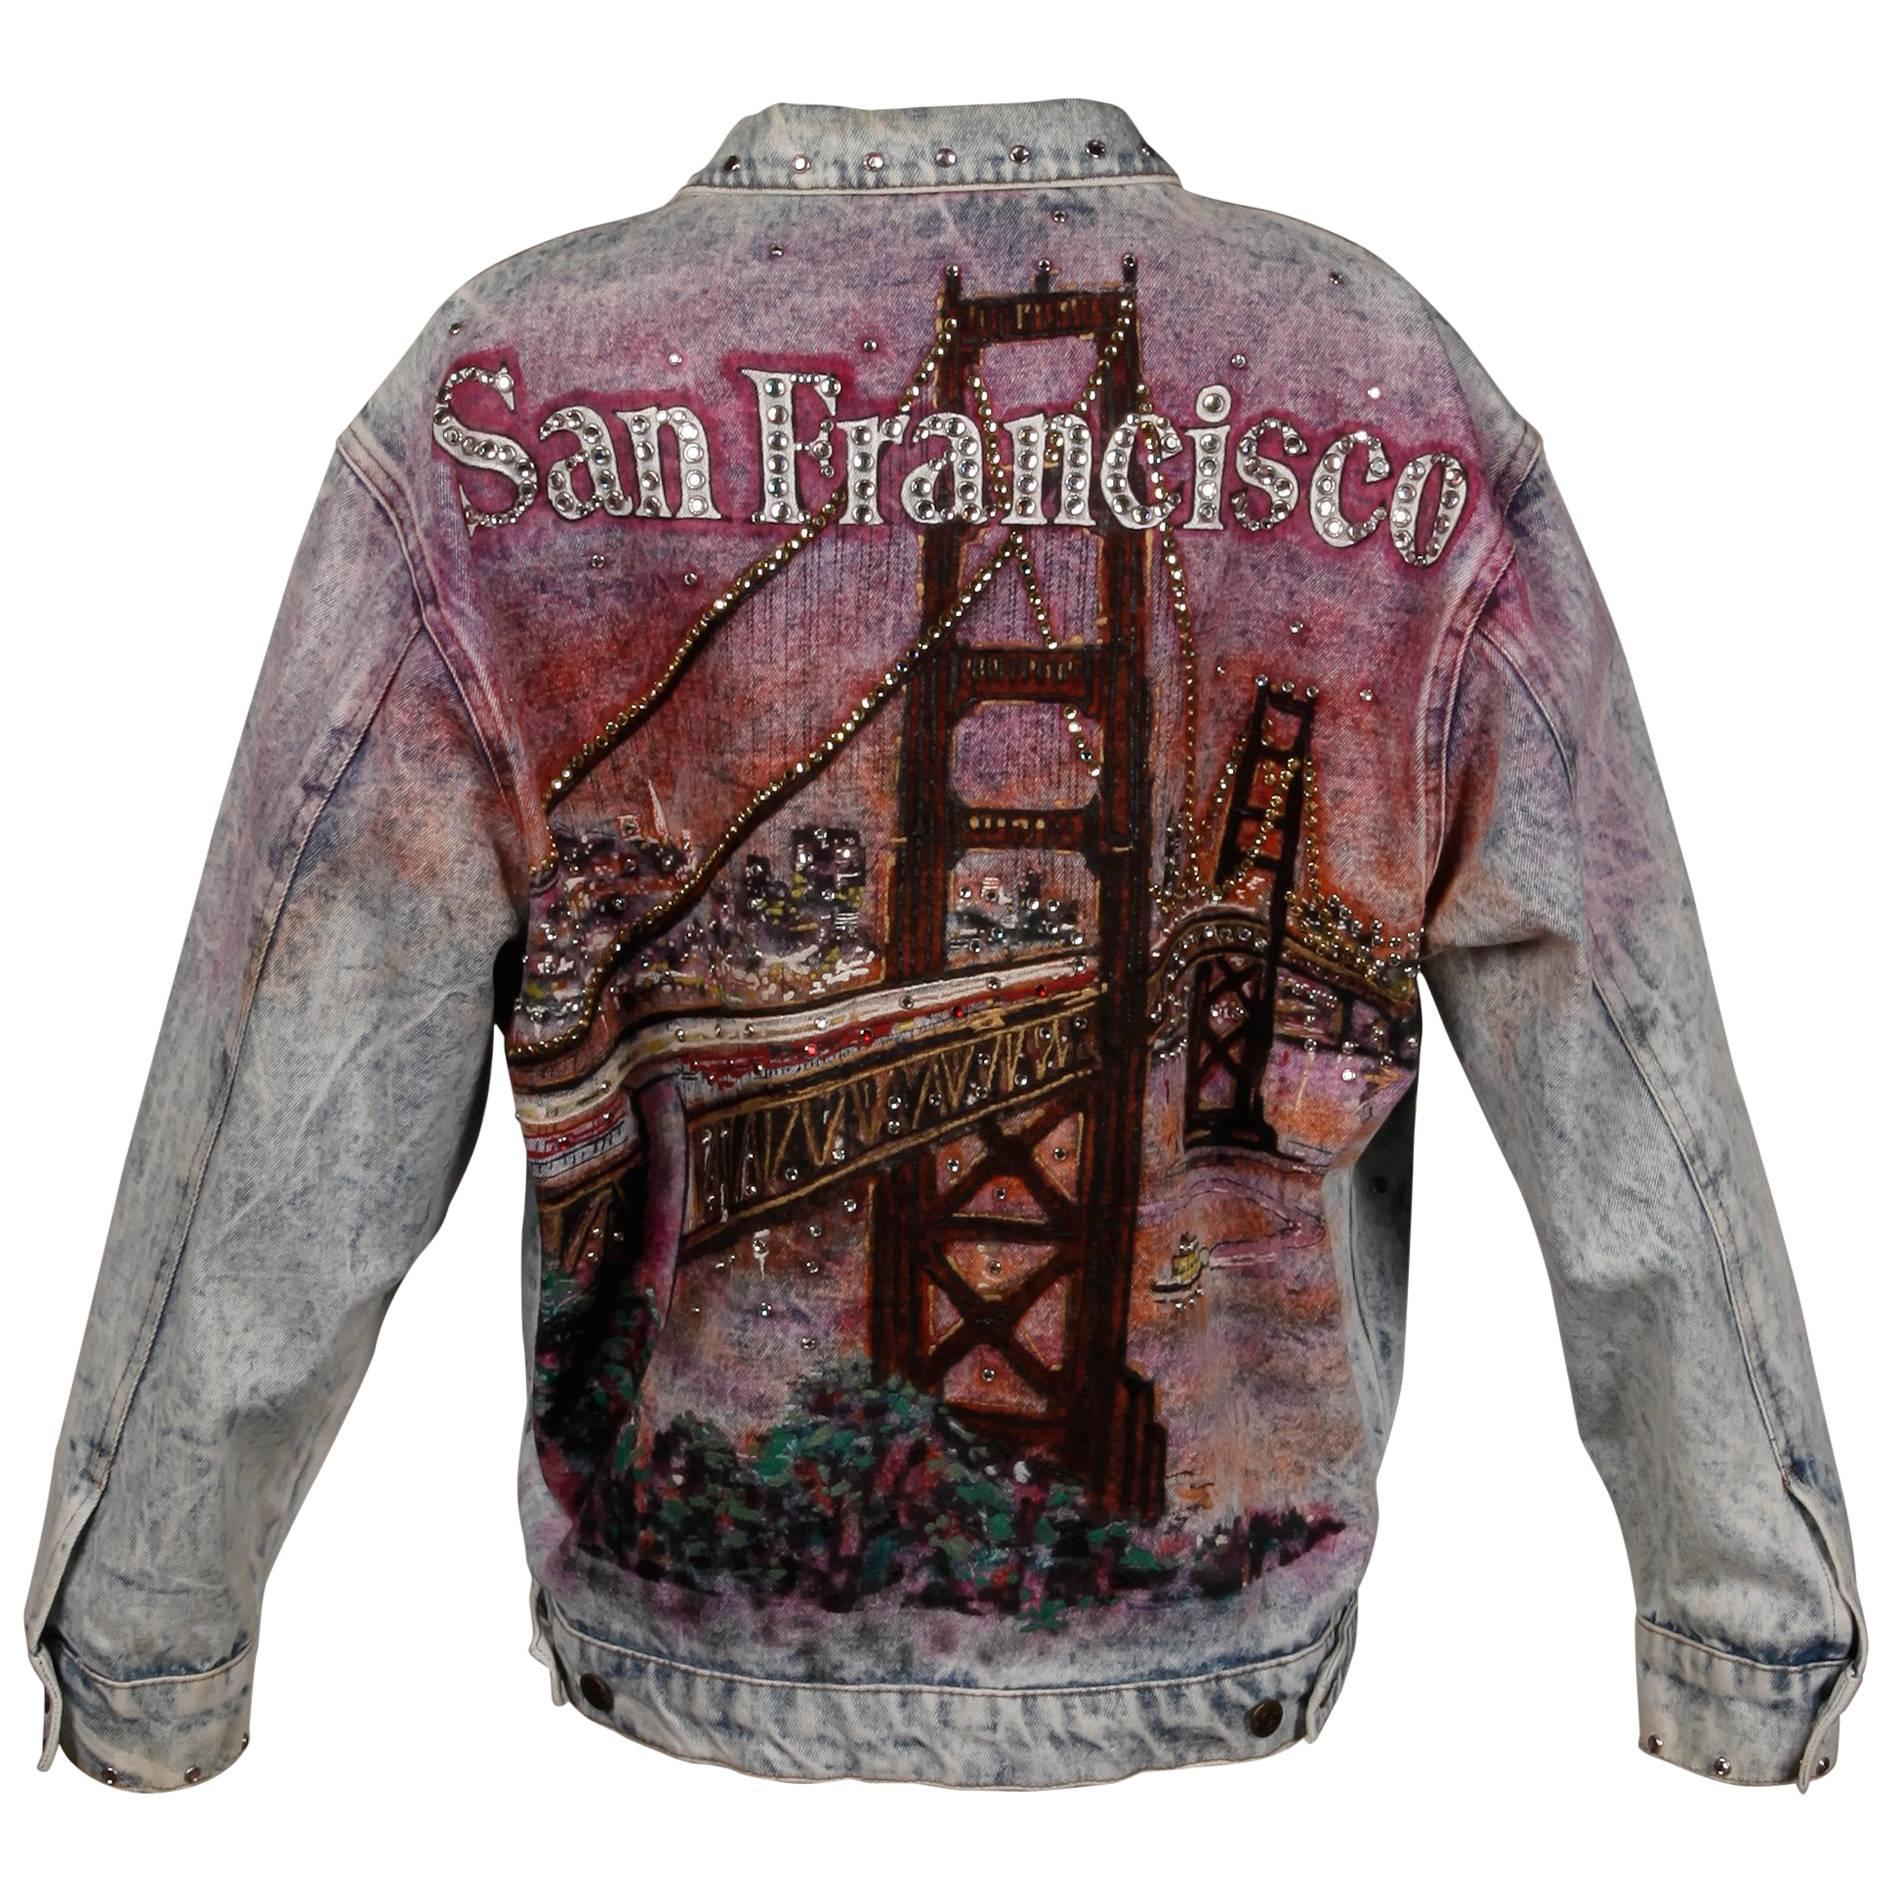 Tony Alamo Vintage Hand Painted and Studded San Francisco Denim Jean Jacket